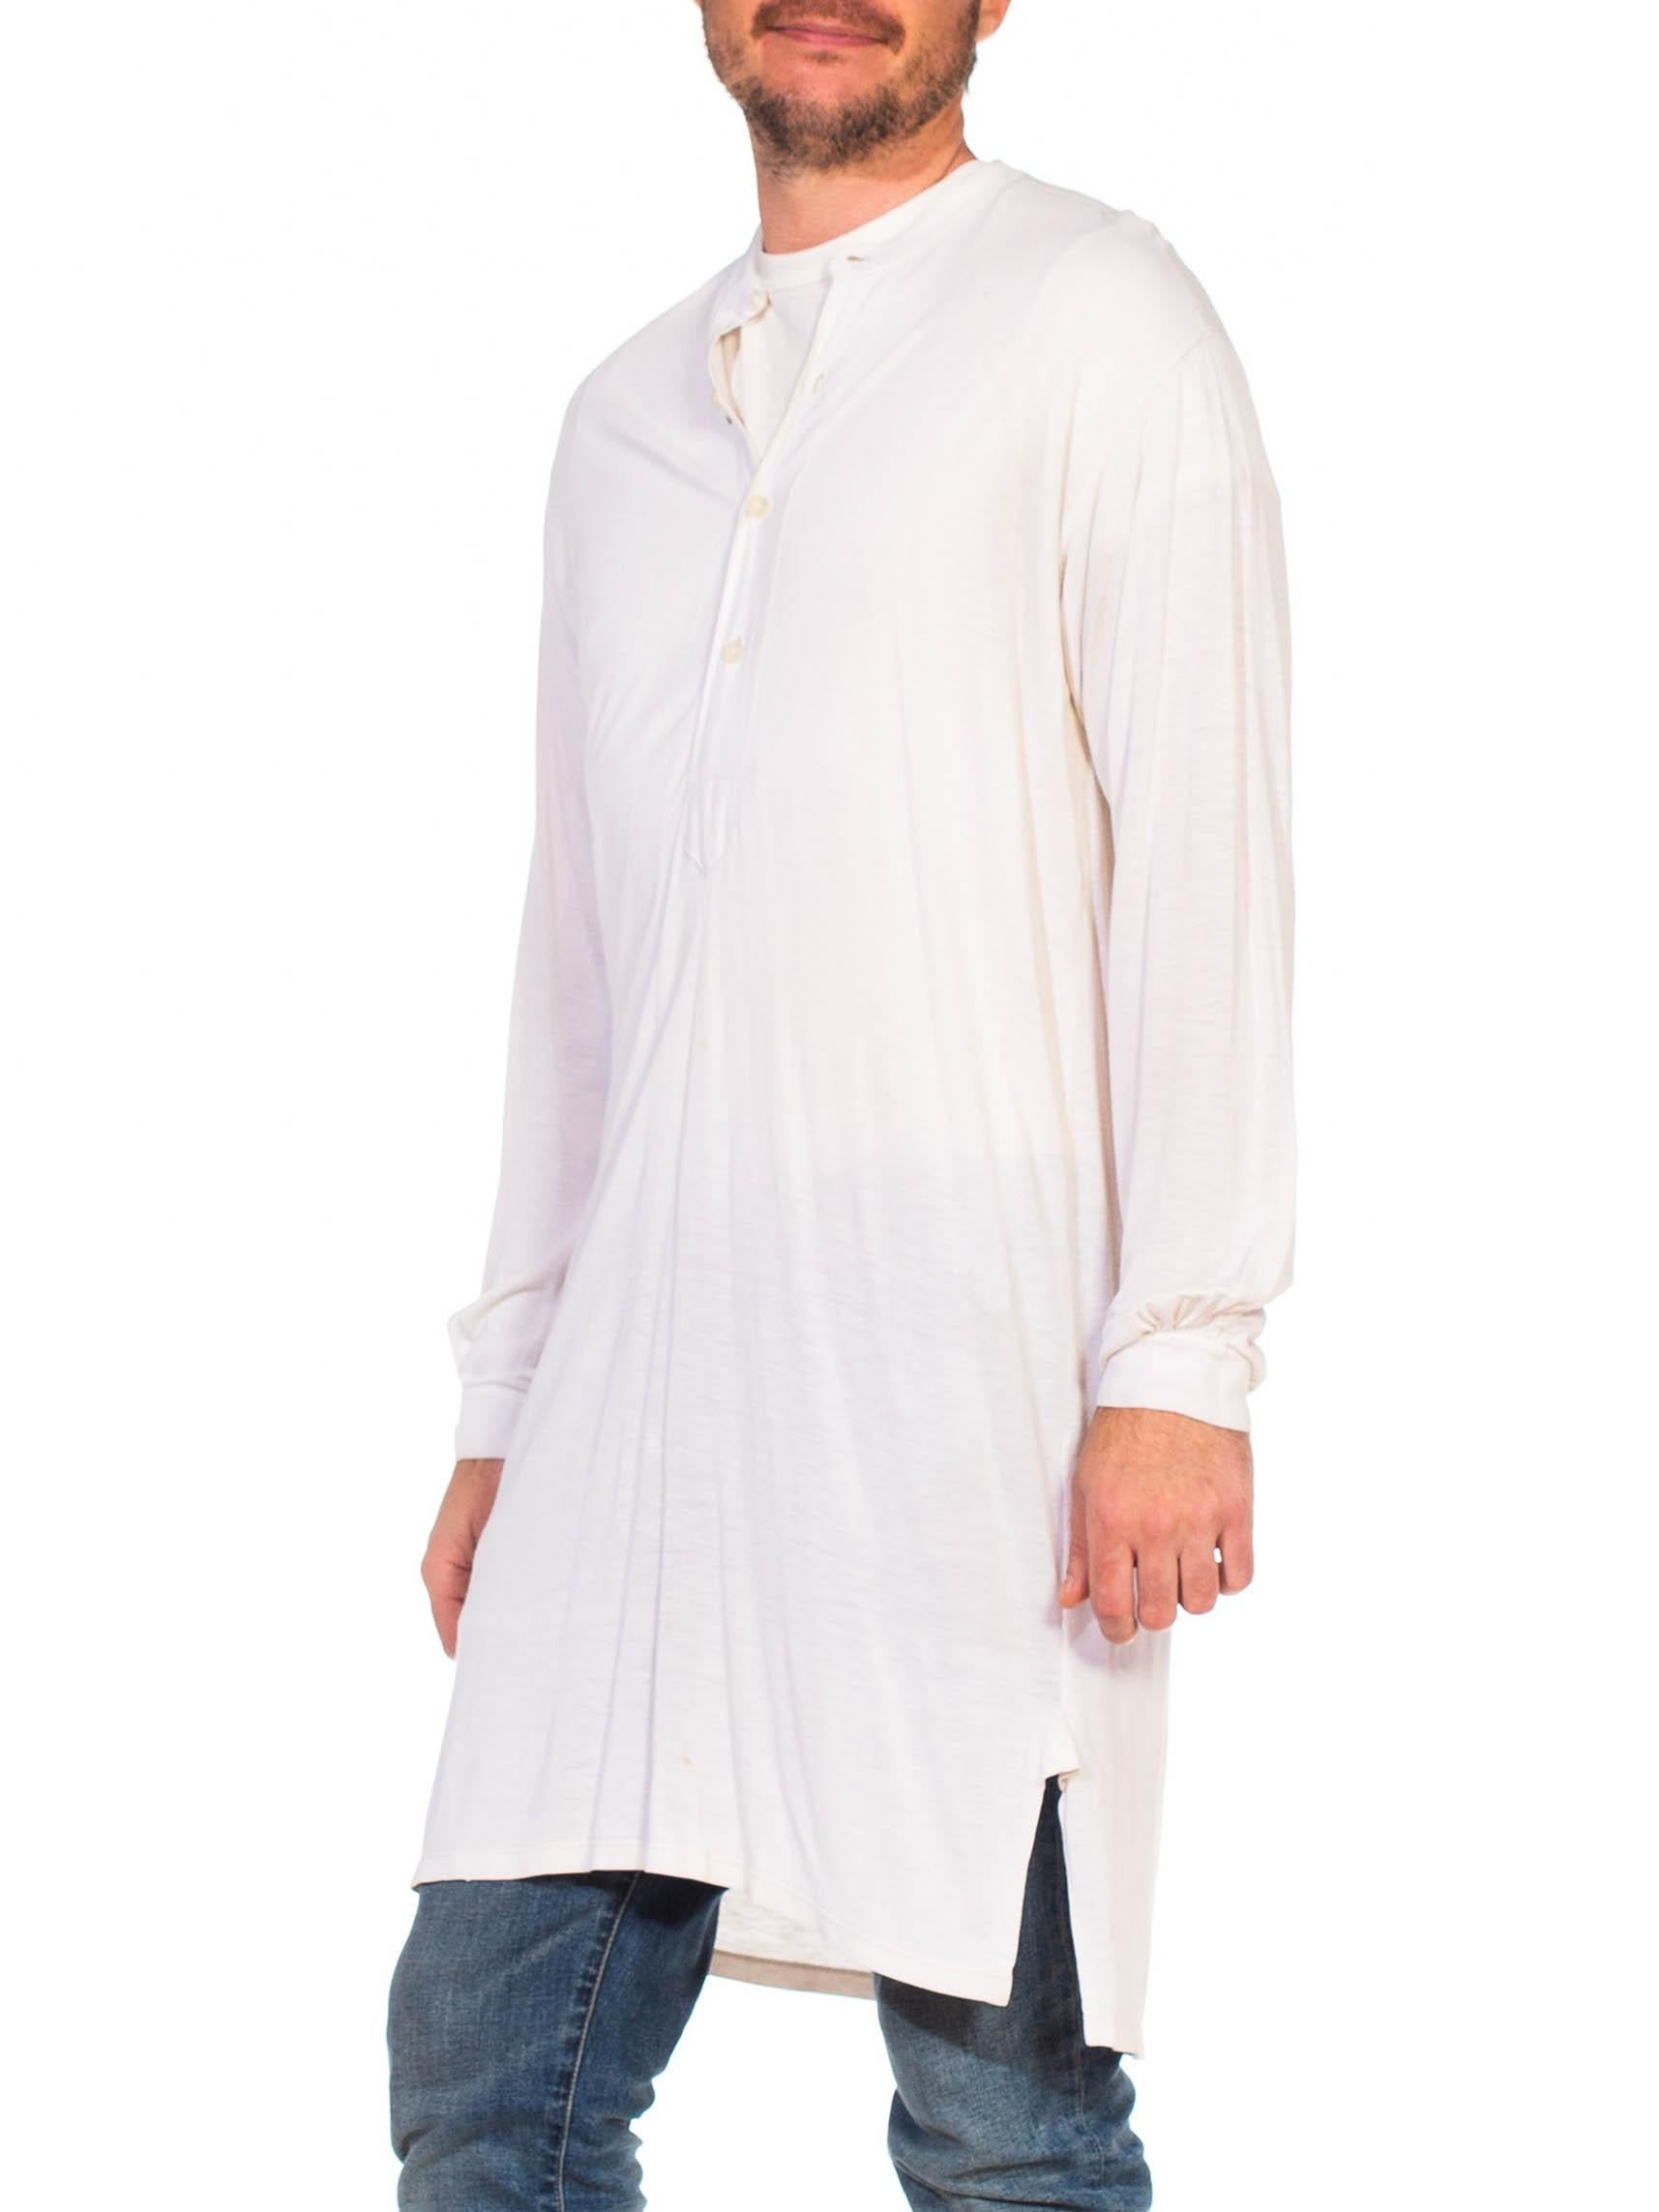 1920s white shirt